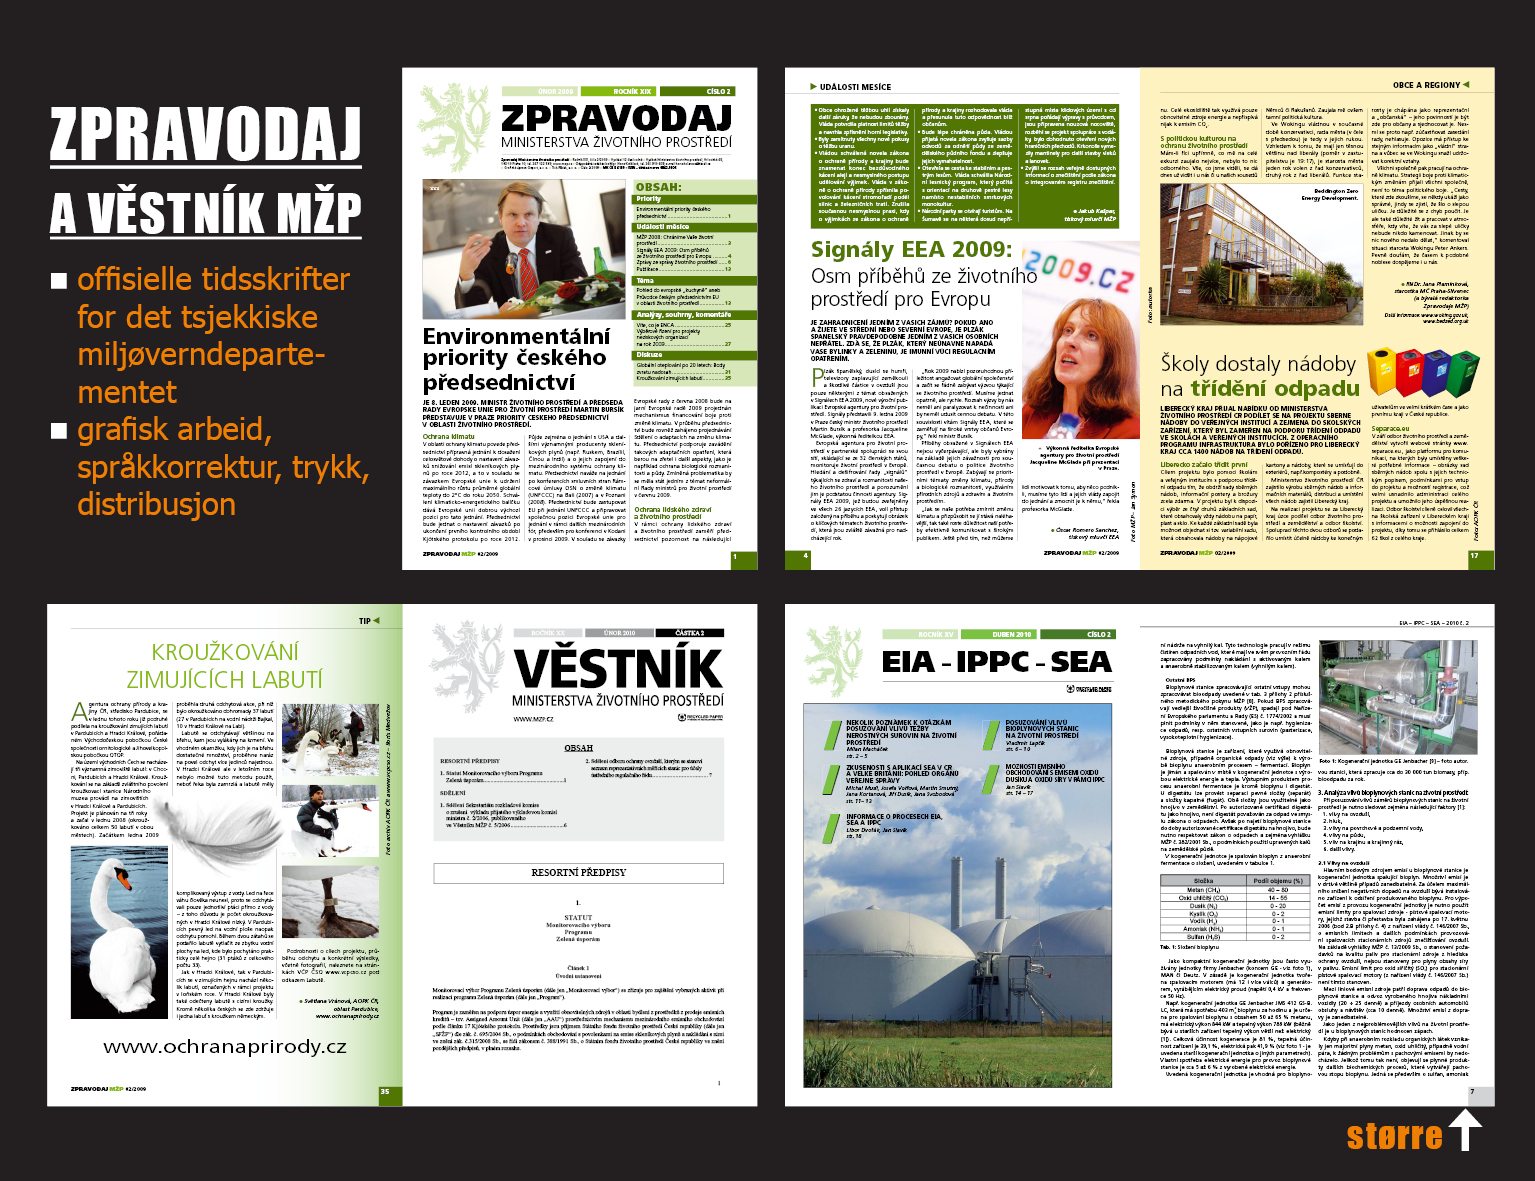 Offisielle tidsskrifter for det tsjekkiske miljøverndepartementet